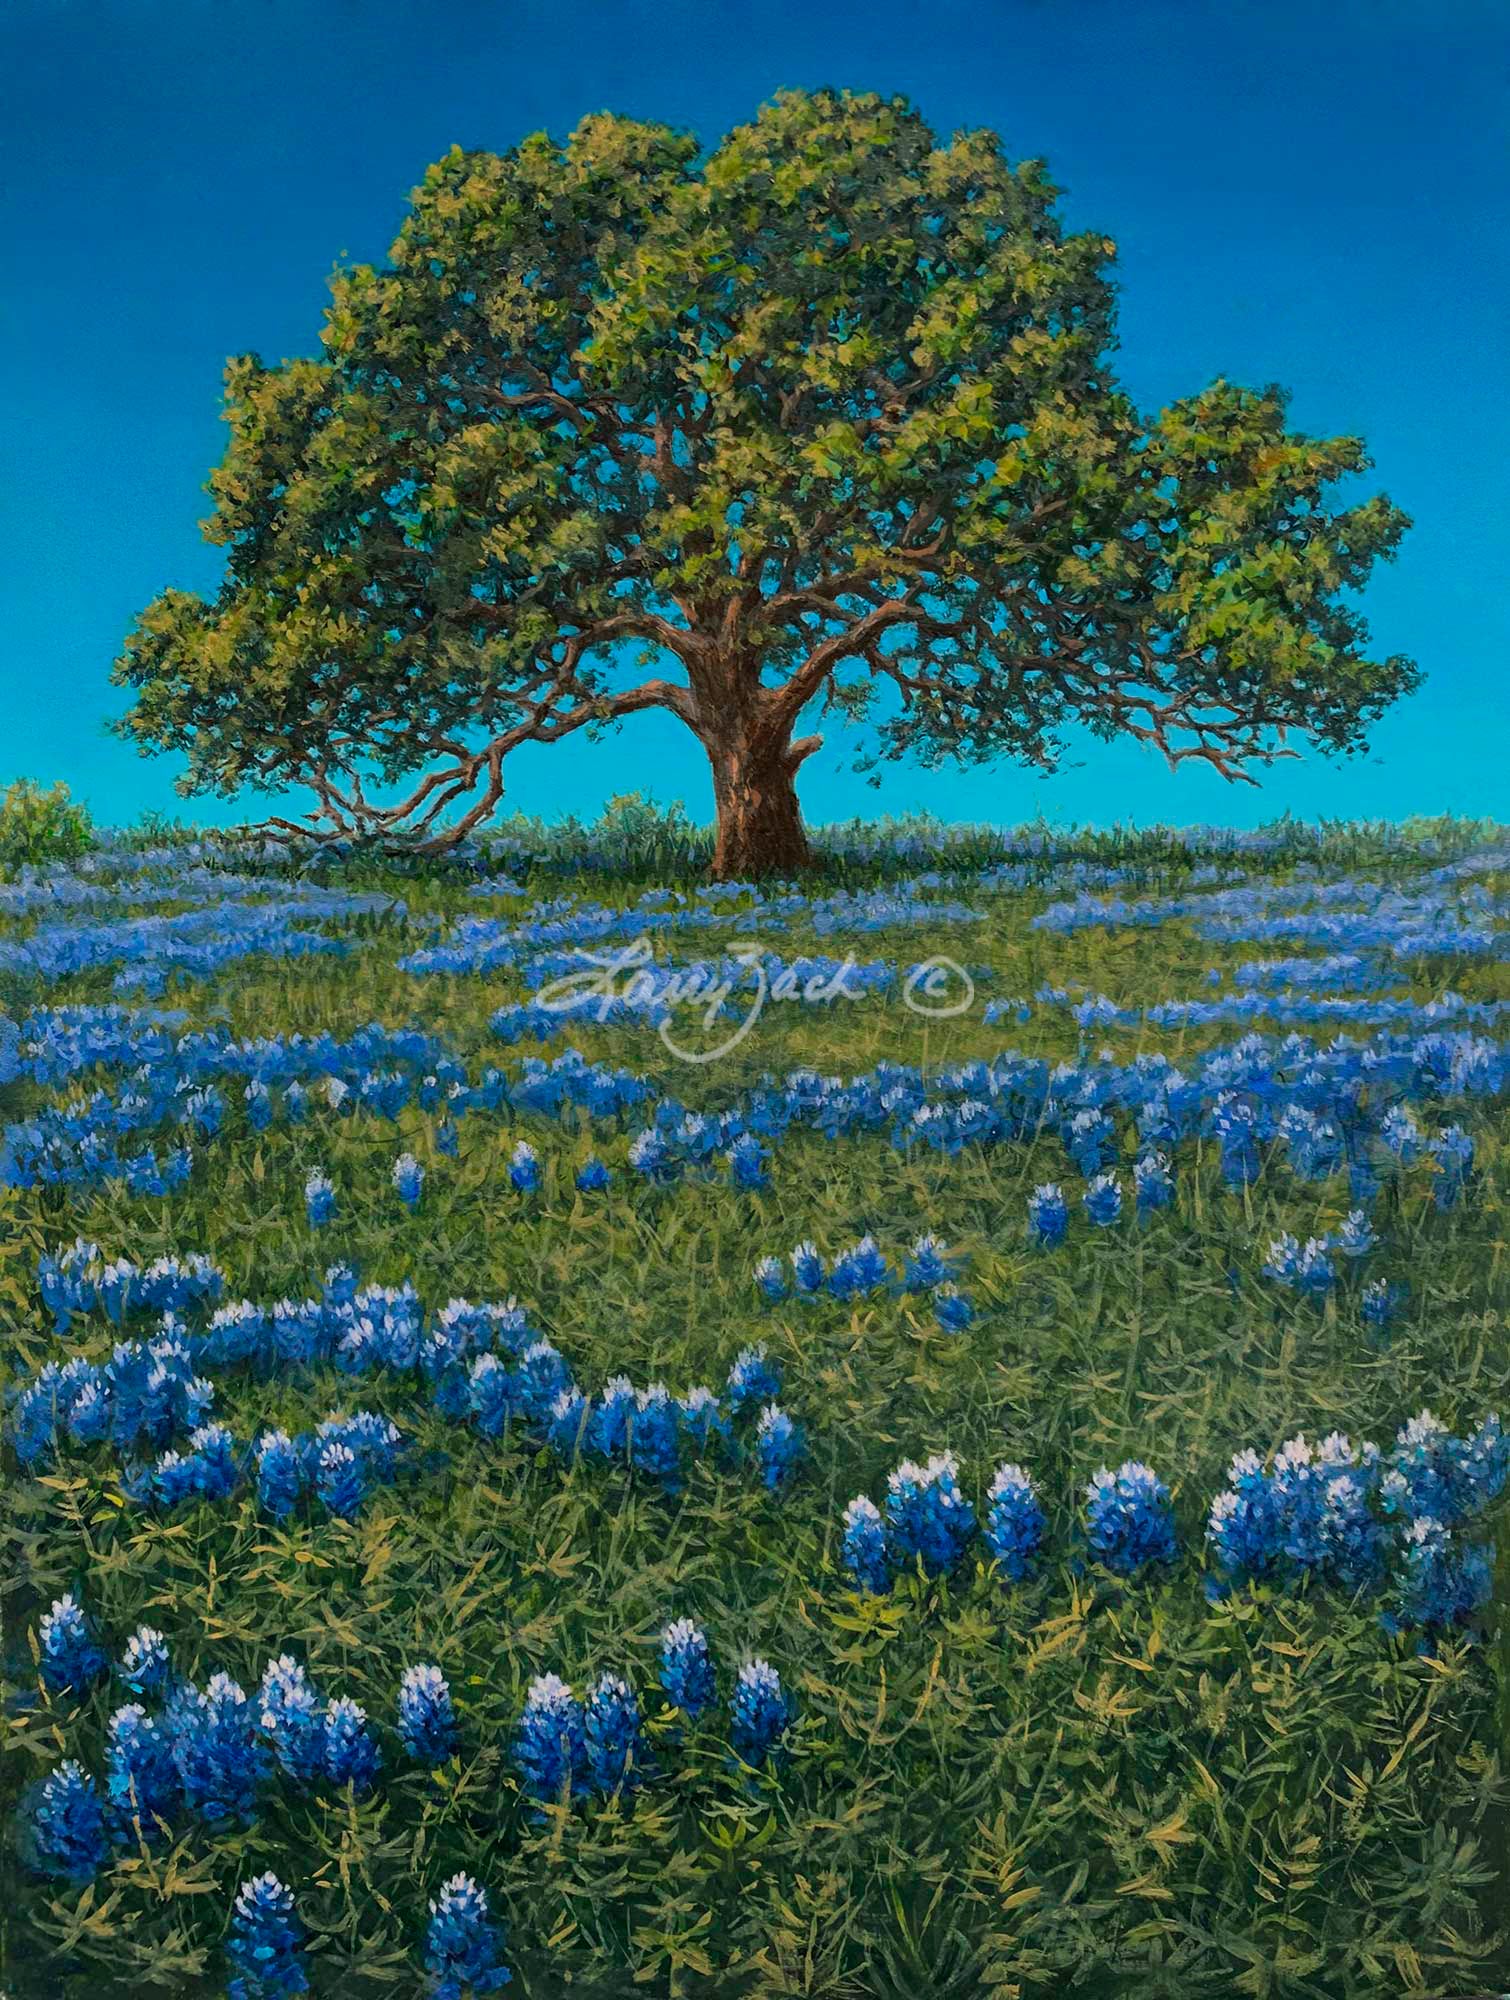 Texas Blue Bonnet by Larry Zach